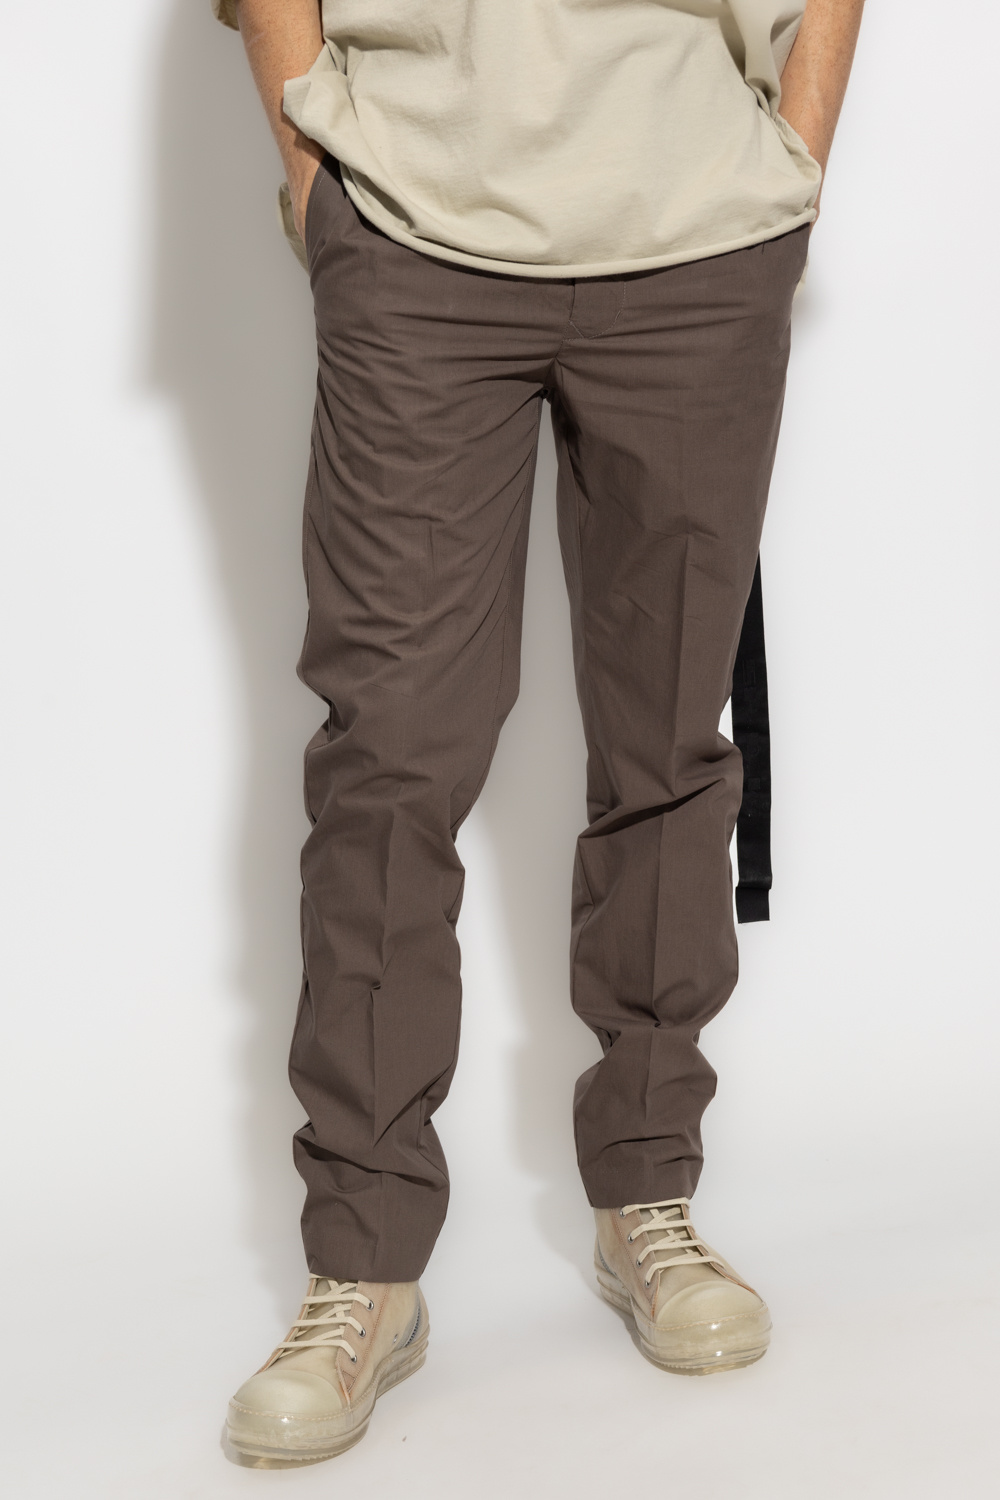 Rick Owens Cotton trousers